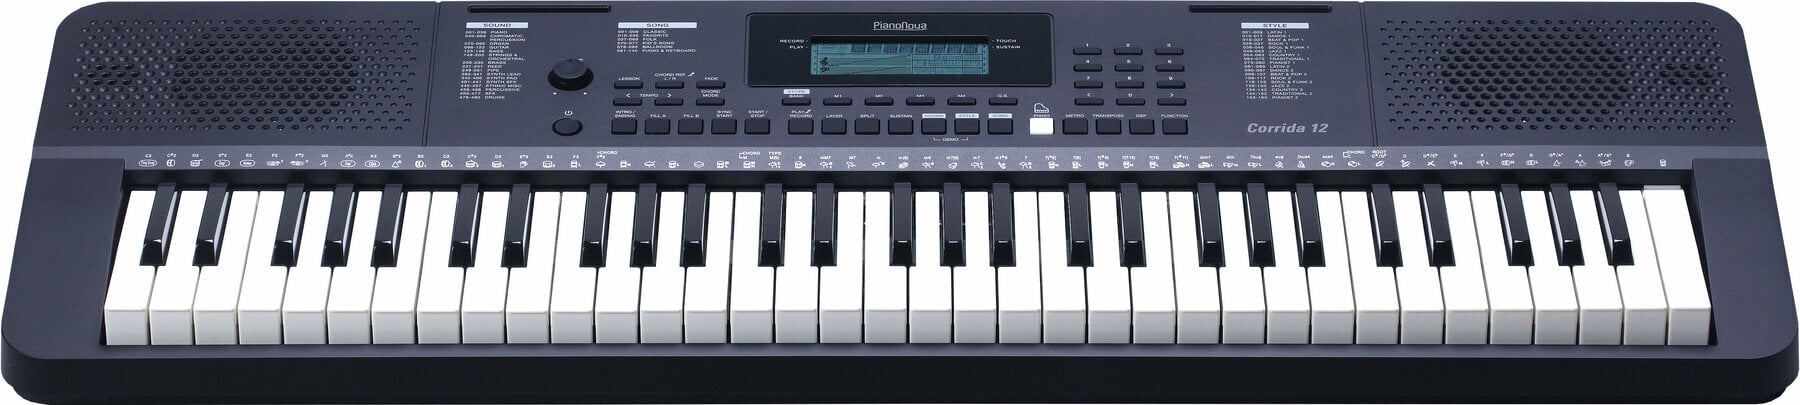 Keyboard with Touch Response Pianonova Corrida 12